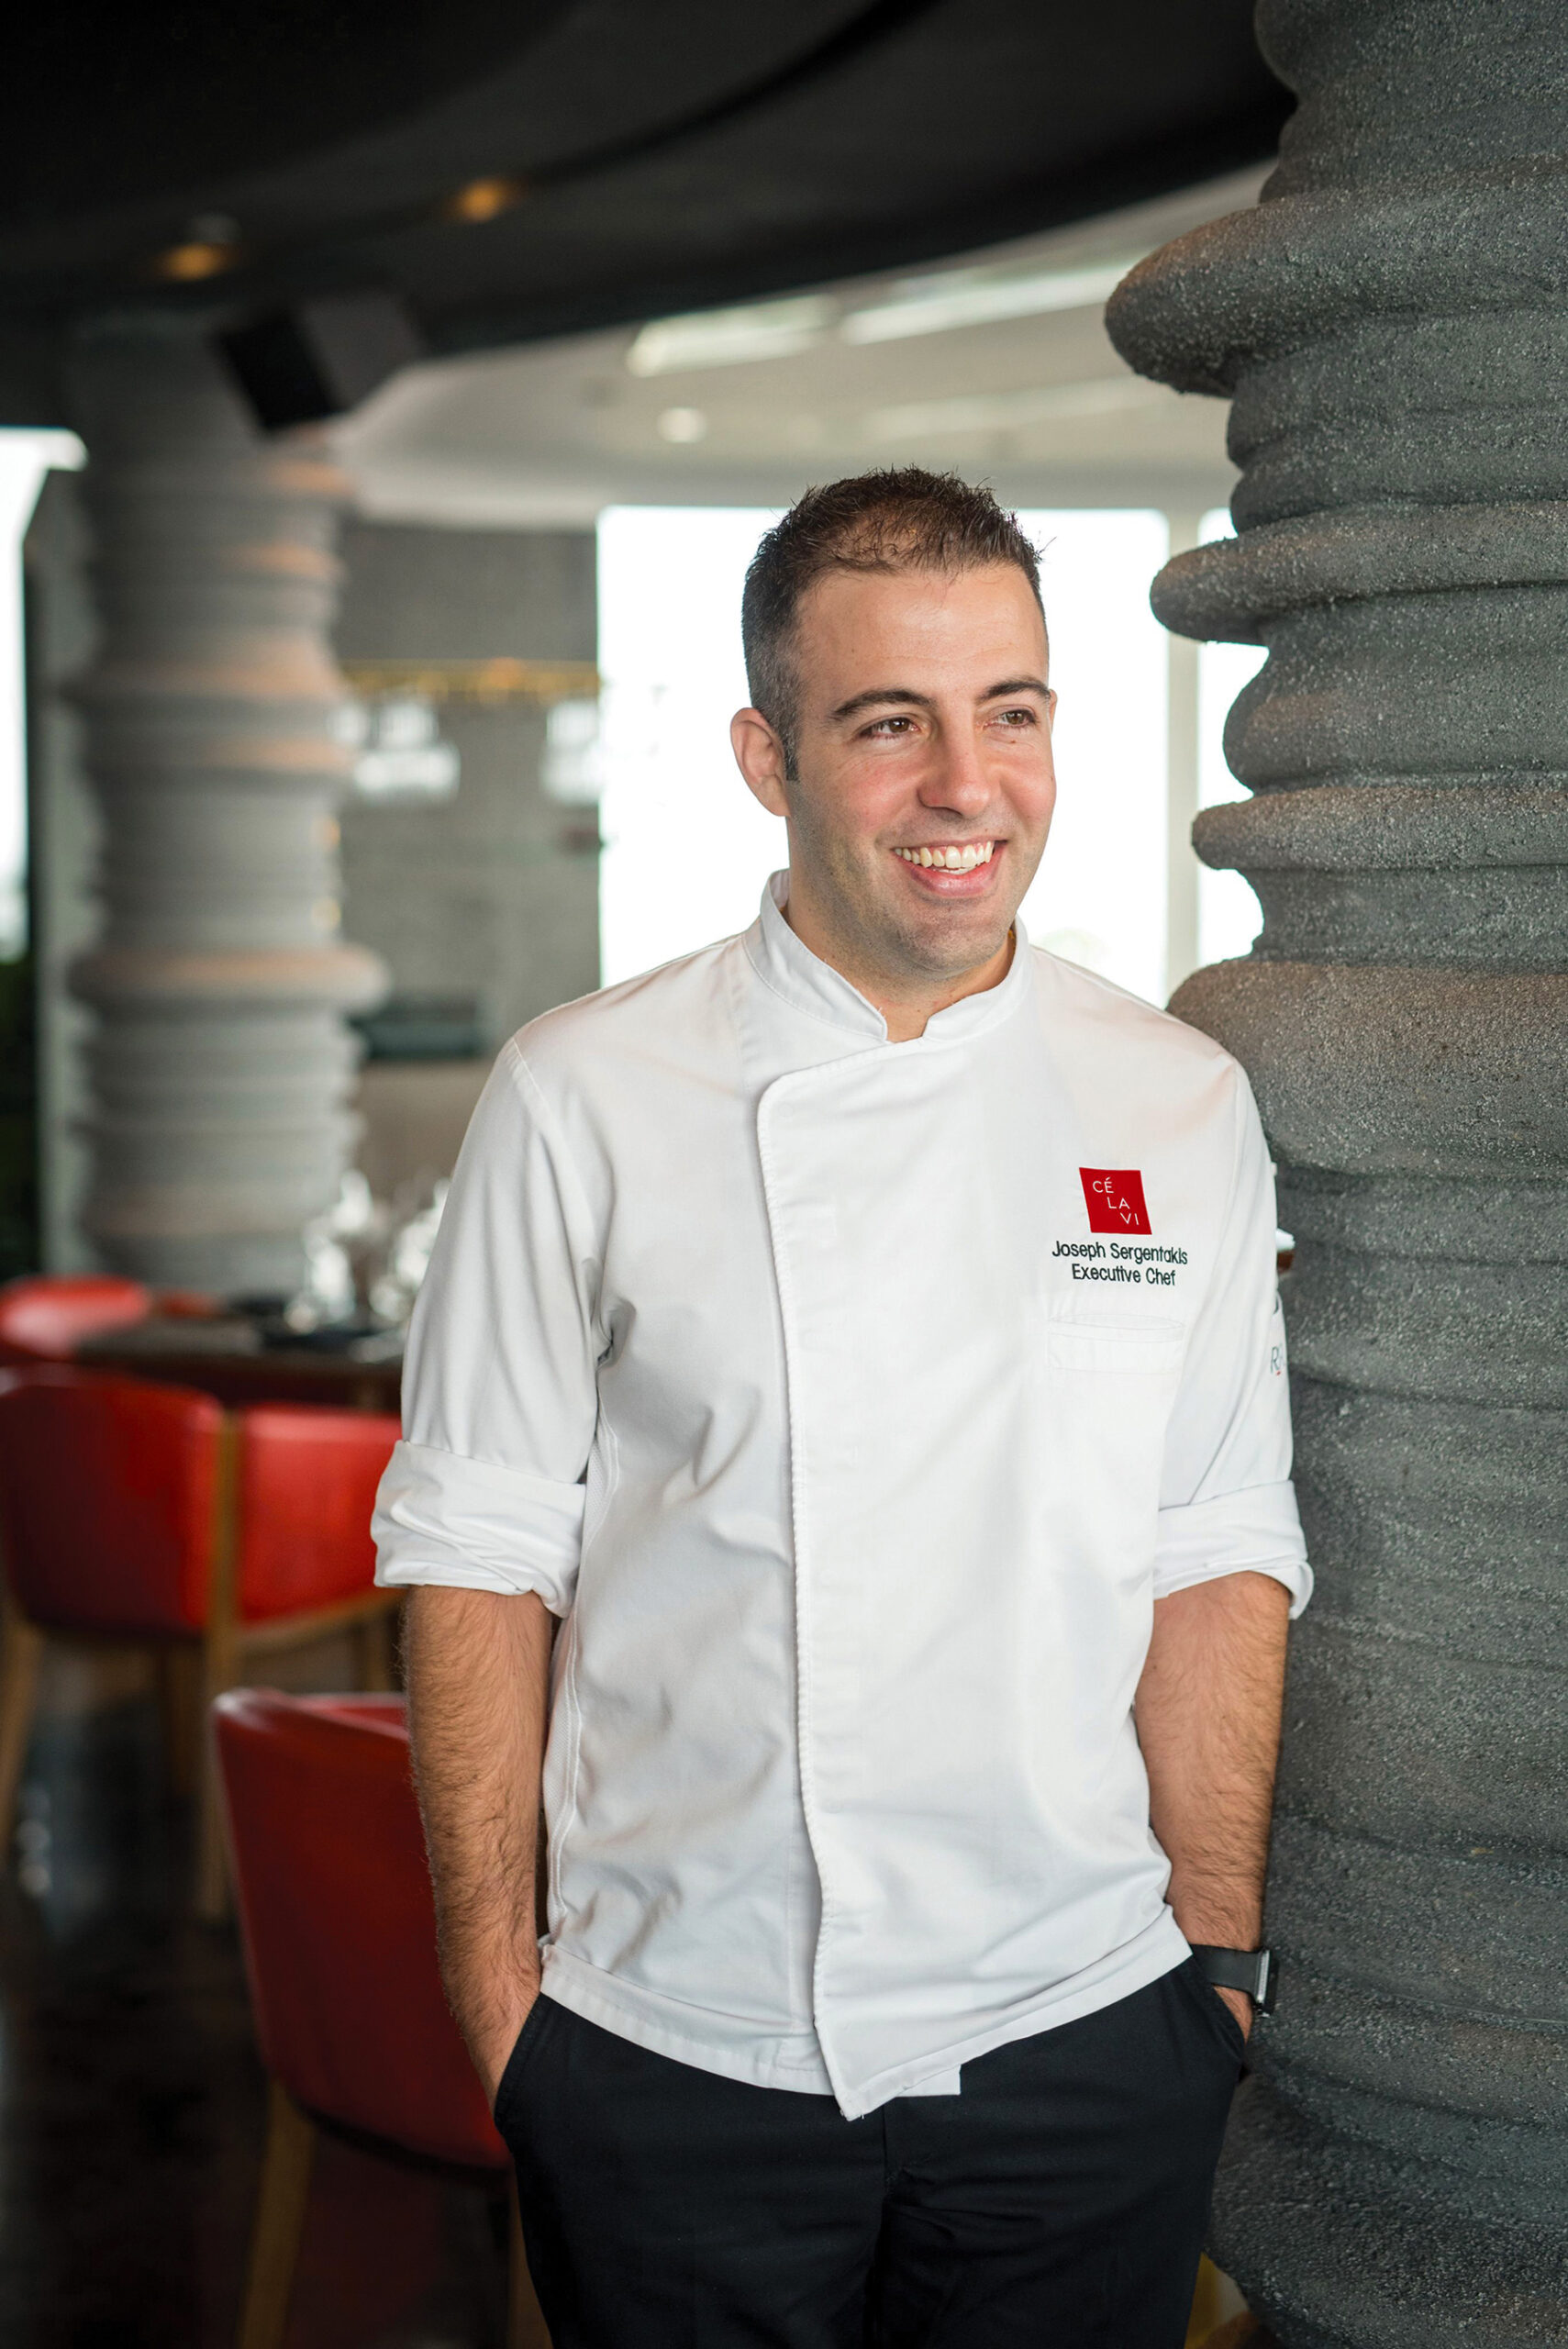 Chef Joey Sergentakis